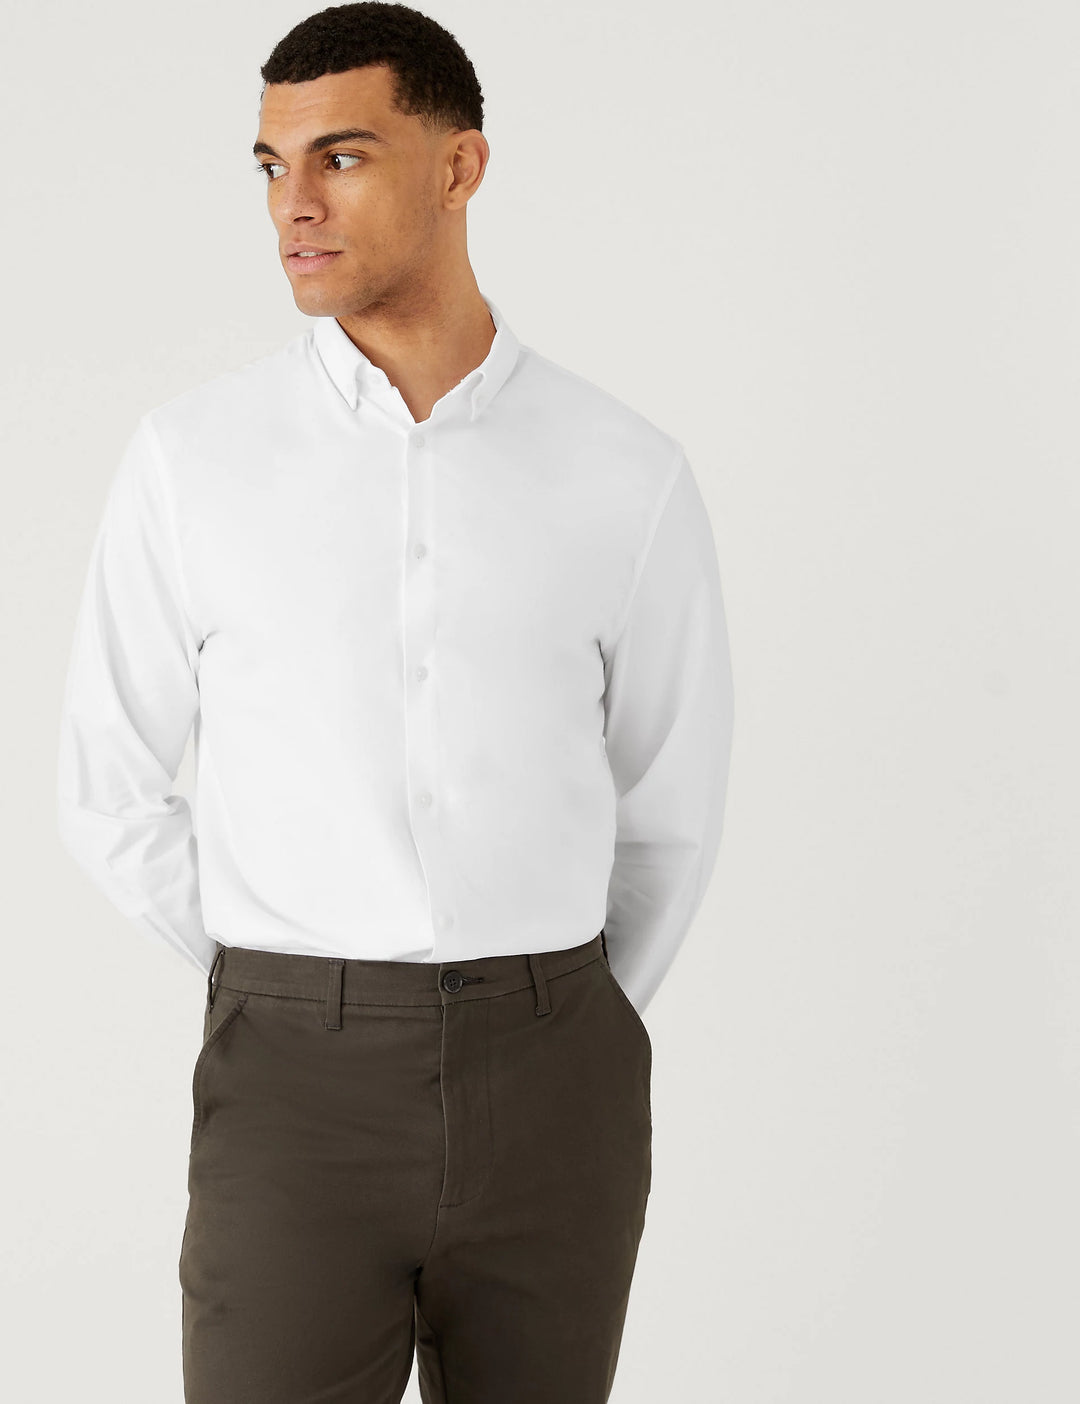 M&S Mens L/S Textured Cotton Casual Shirt T11/0605